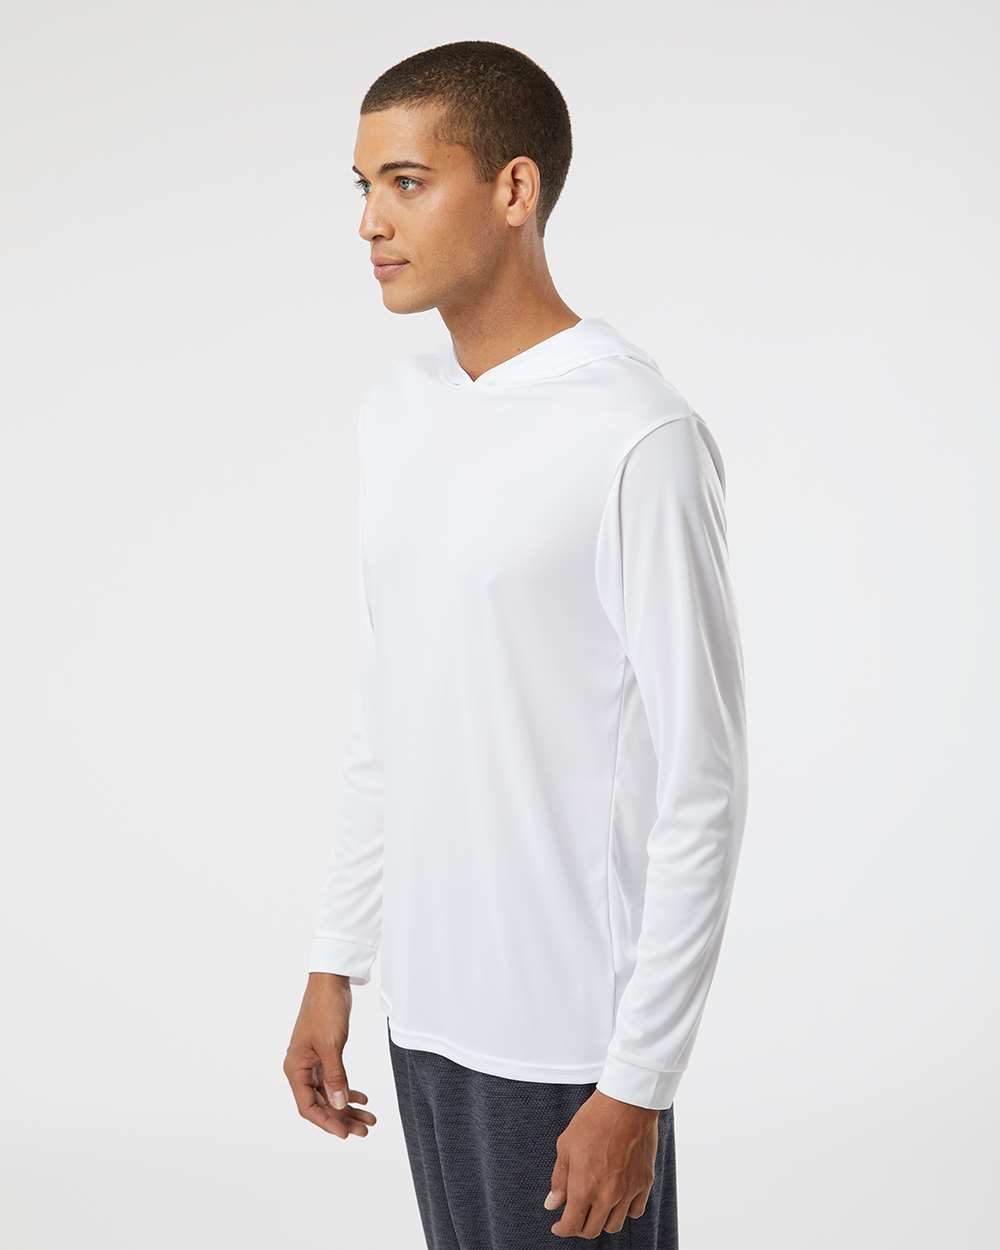 Paragon 220 Performance Sleeve T-Shirt Hooded - Bahama Long